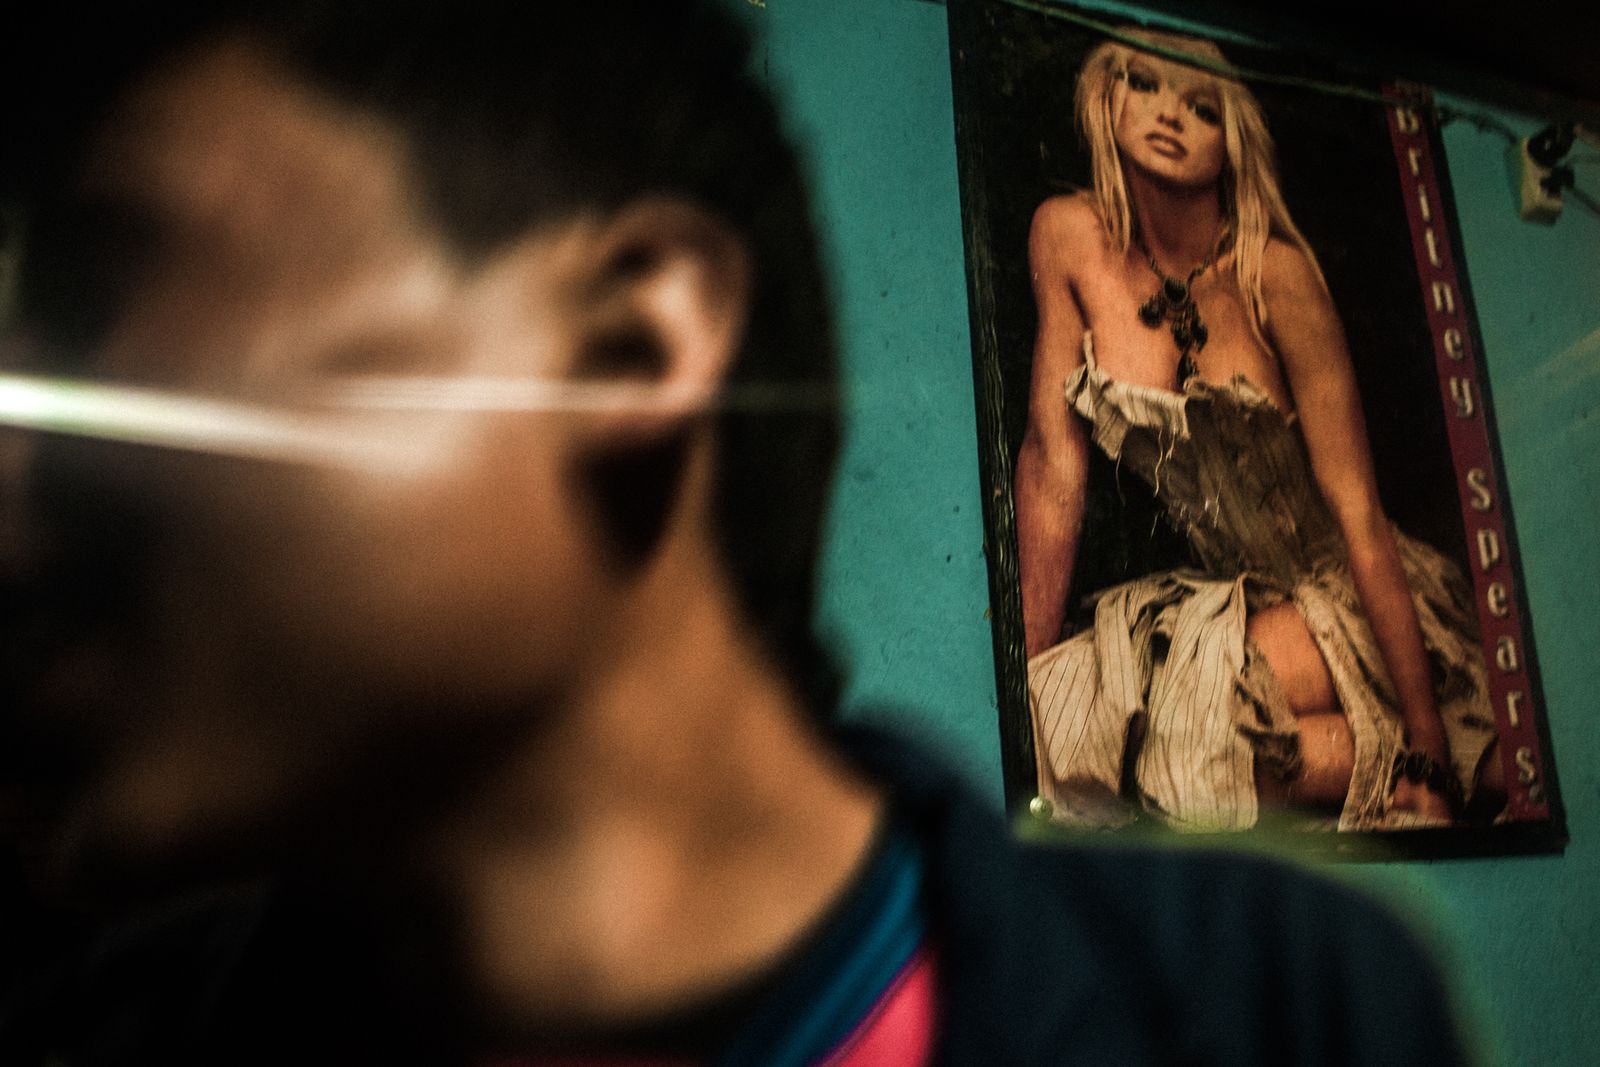 © Celine Croze - Inside the speakeasy, Pablo just caught a prostitute. Patrocinio, Guatemala, 2015.